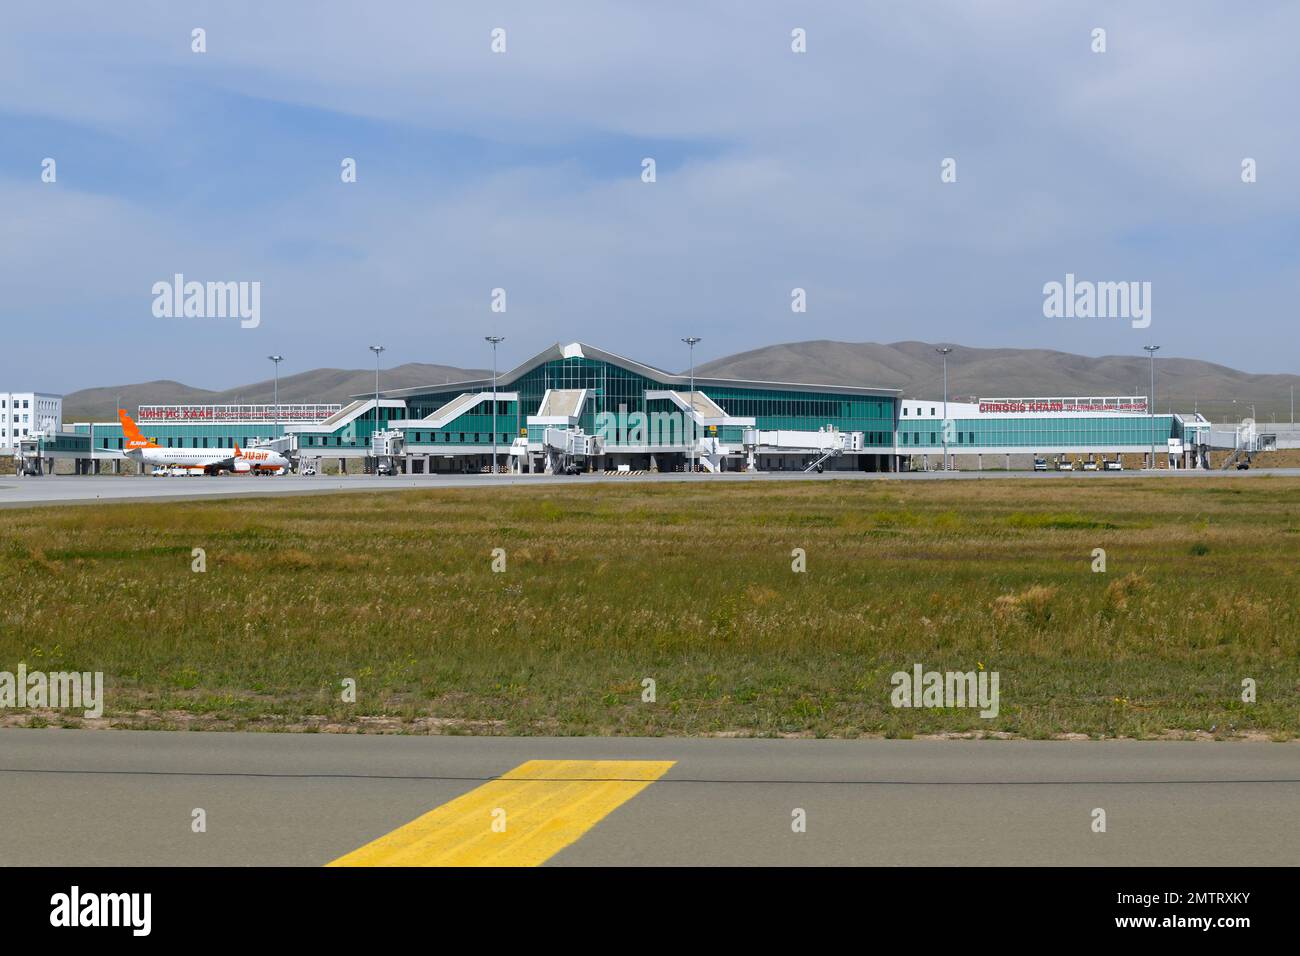 Flughafen Ulaanbaatar in der Mongolei heißt Chinggis Khaan International Airport. Passagierterminal des neuen internationalen Flughafens Ulaanbaatar. Neuer Flughafen. Stockfoto